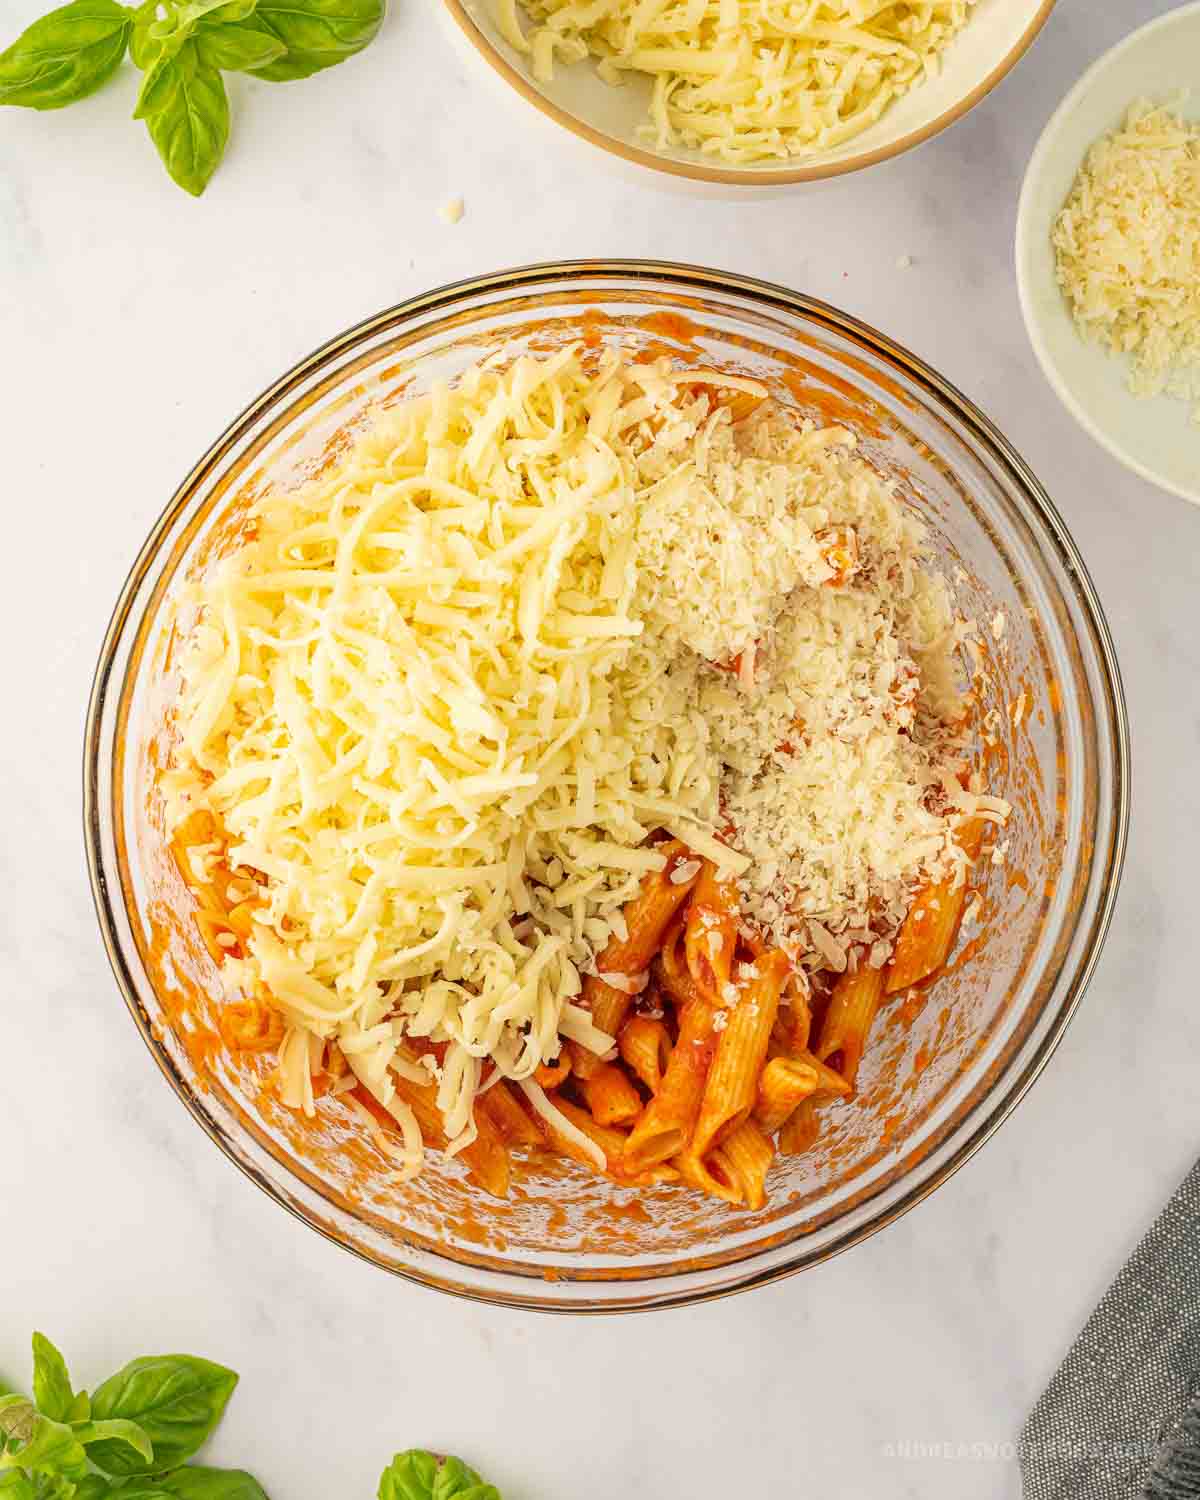 Mozzarella cheese mixed with marinara and pasta.